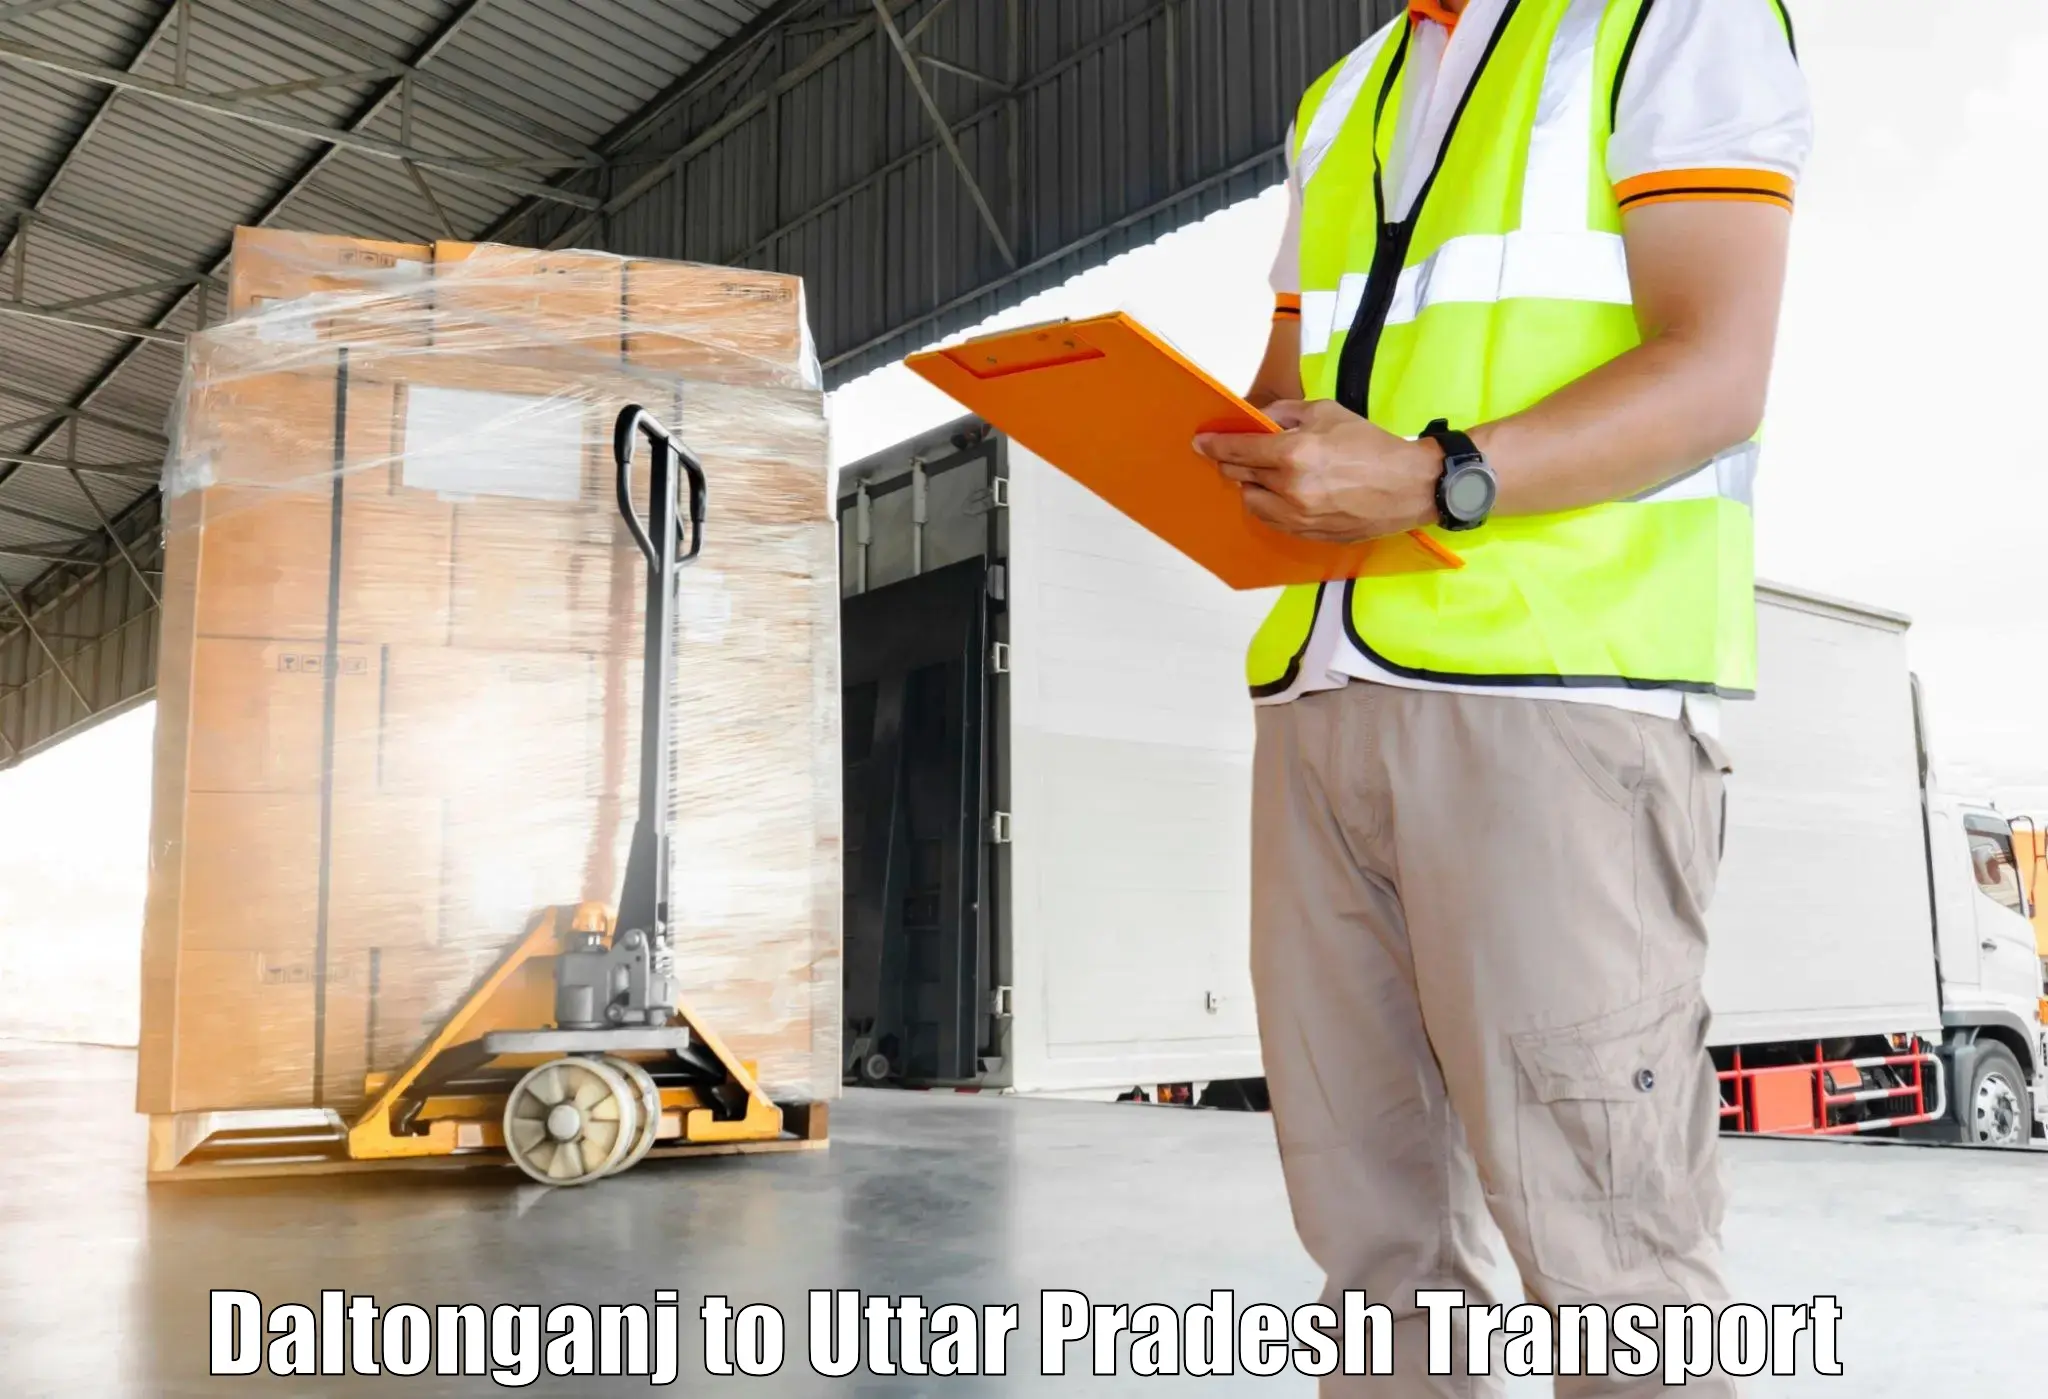 Truck transport companies in India Daltonganj to Rath